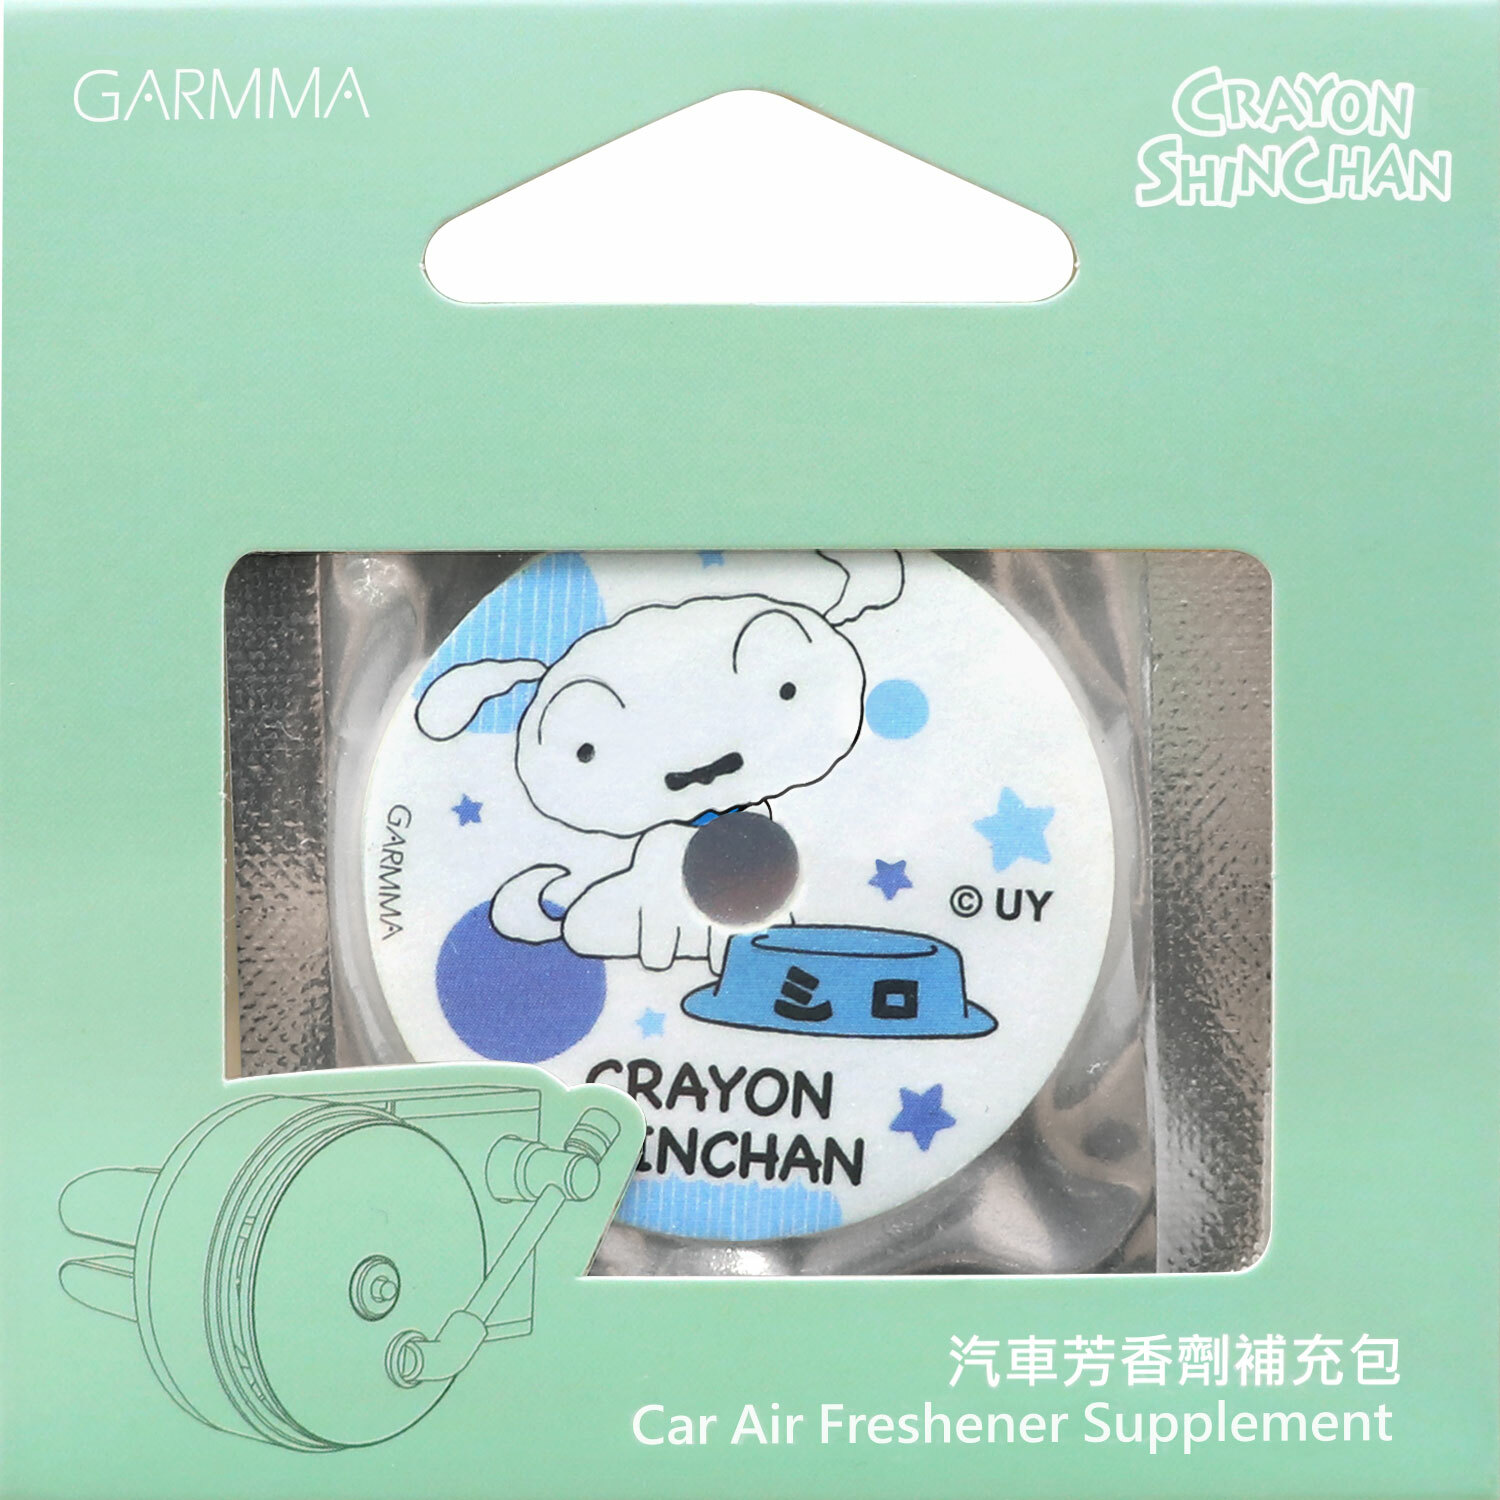 GARMMA 汽車芳香劑補充包 (蠟筆小新 唱片款)